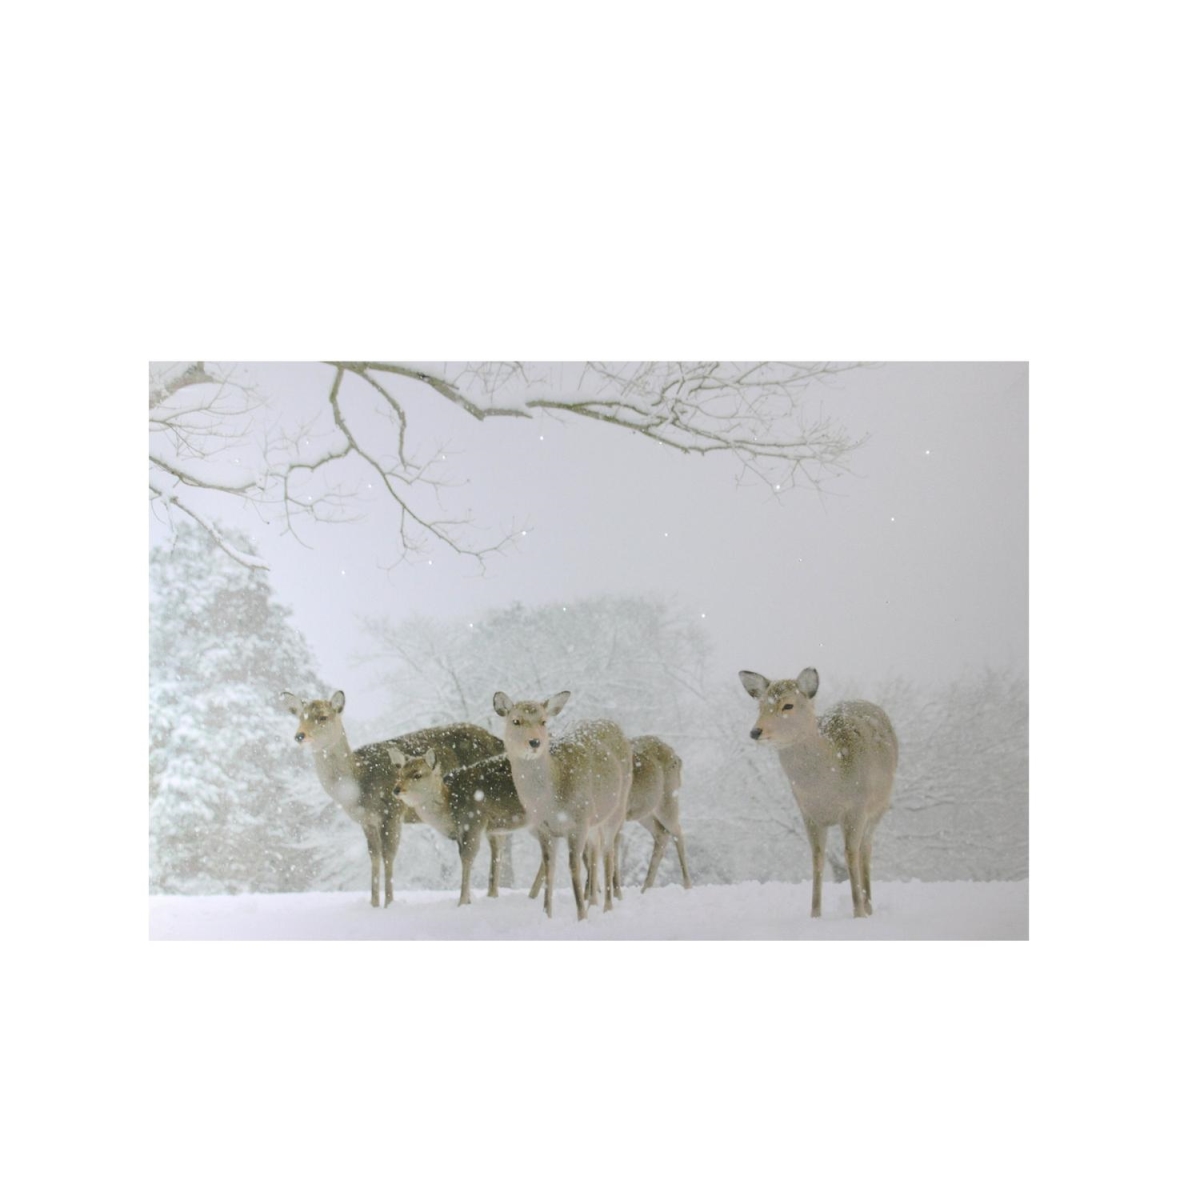 32621259 Small Fiber Optic Winter With Deer Canvas Wall Art